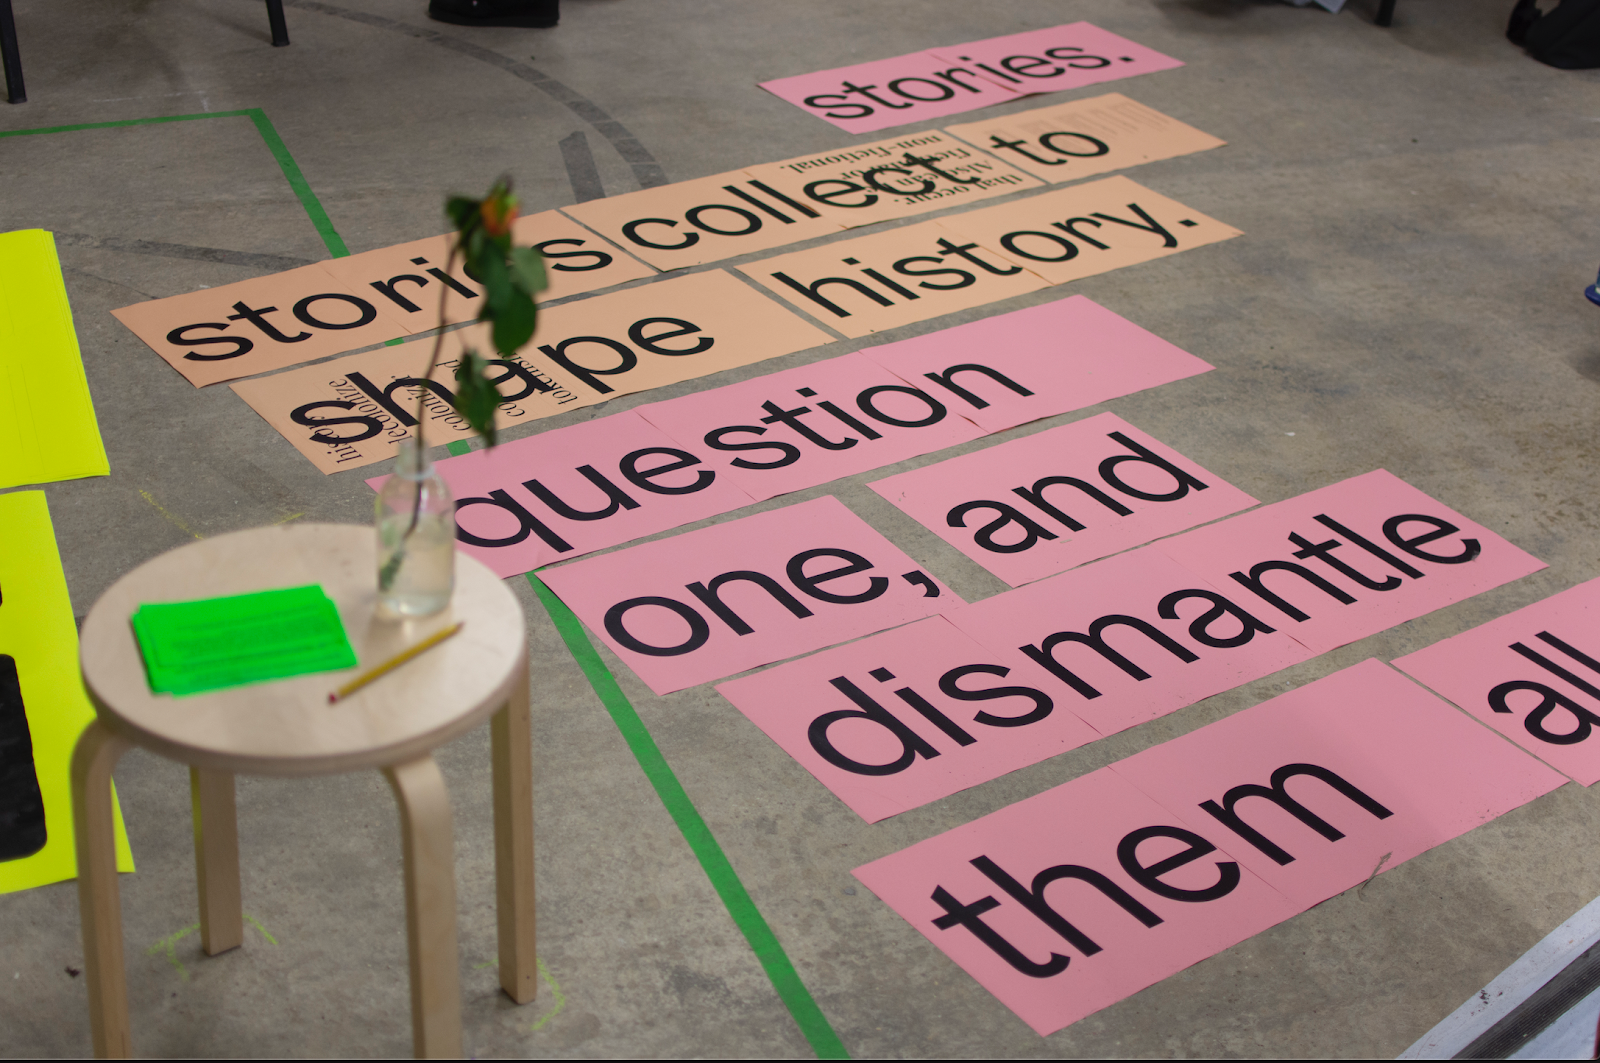 ‘Conversation as Design’ workshop run by Graphic Design student Ravista Mehra. Image Credit: Max Kohler